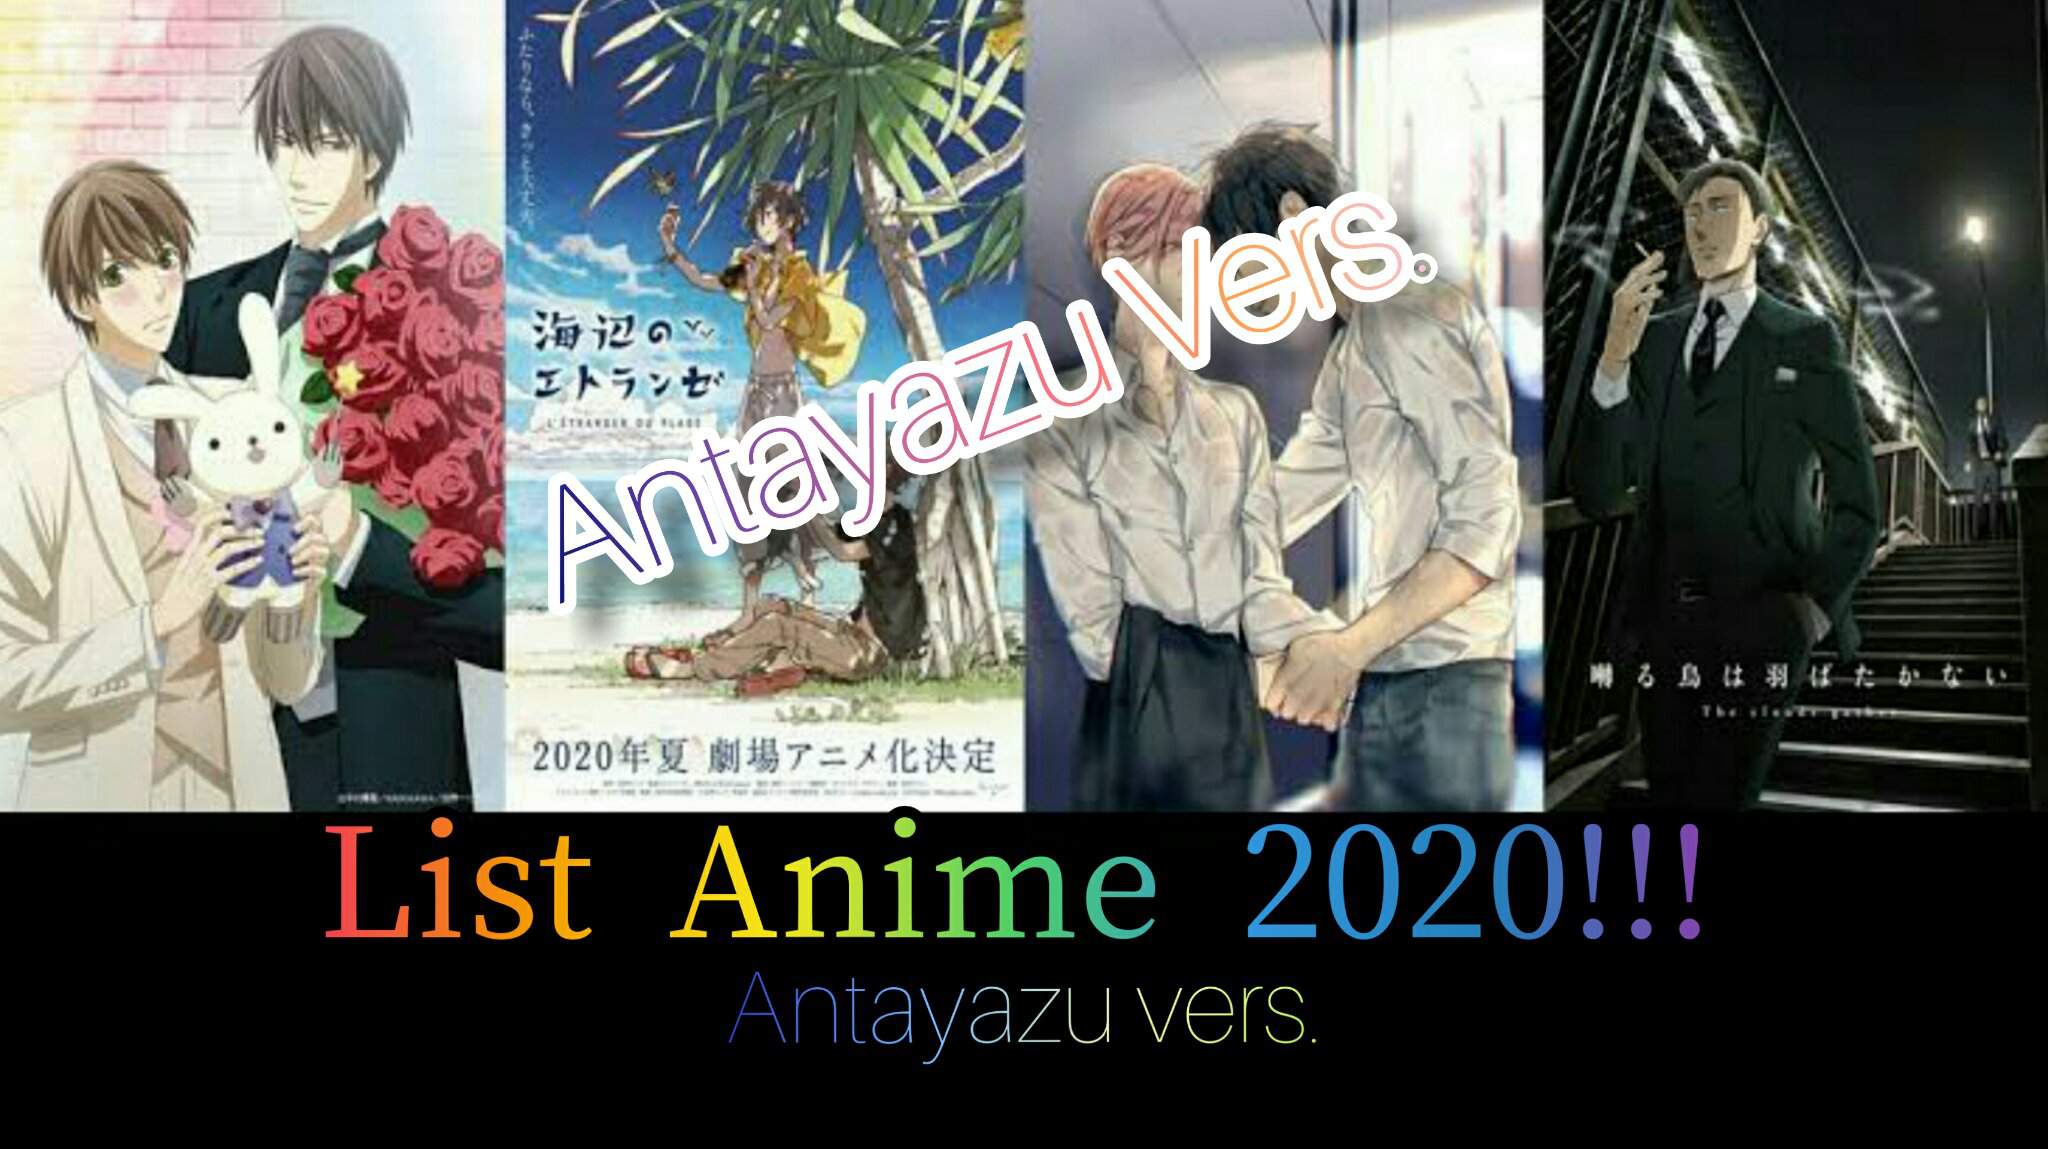 bl anime movies